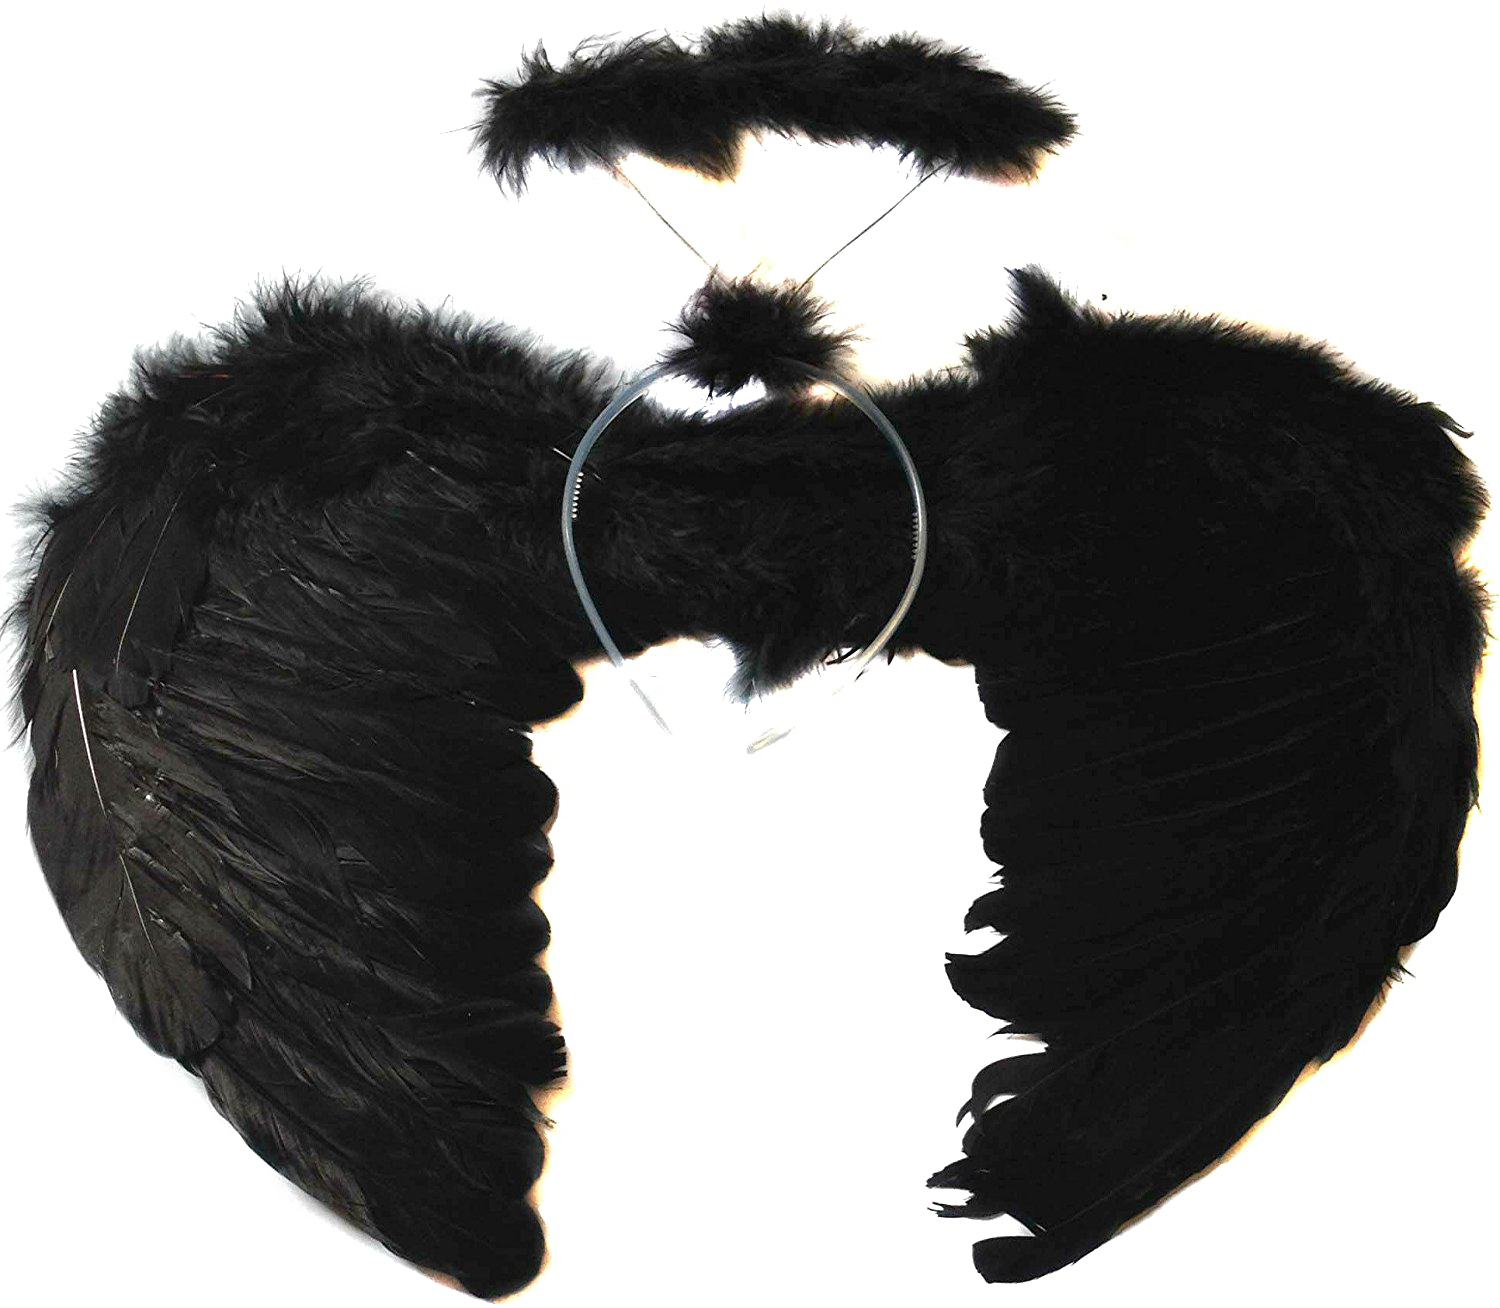 Black Angel Ailes Image Transparente